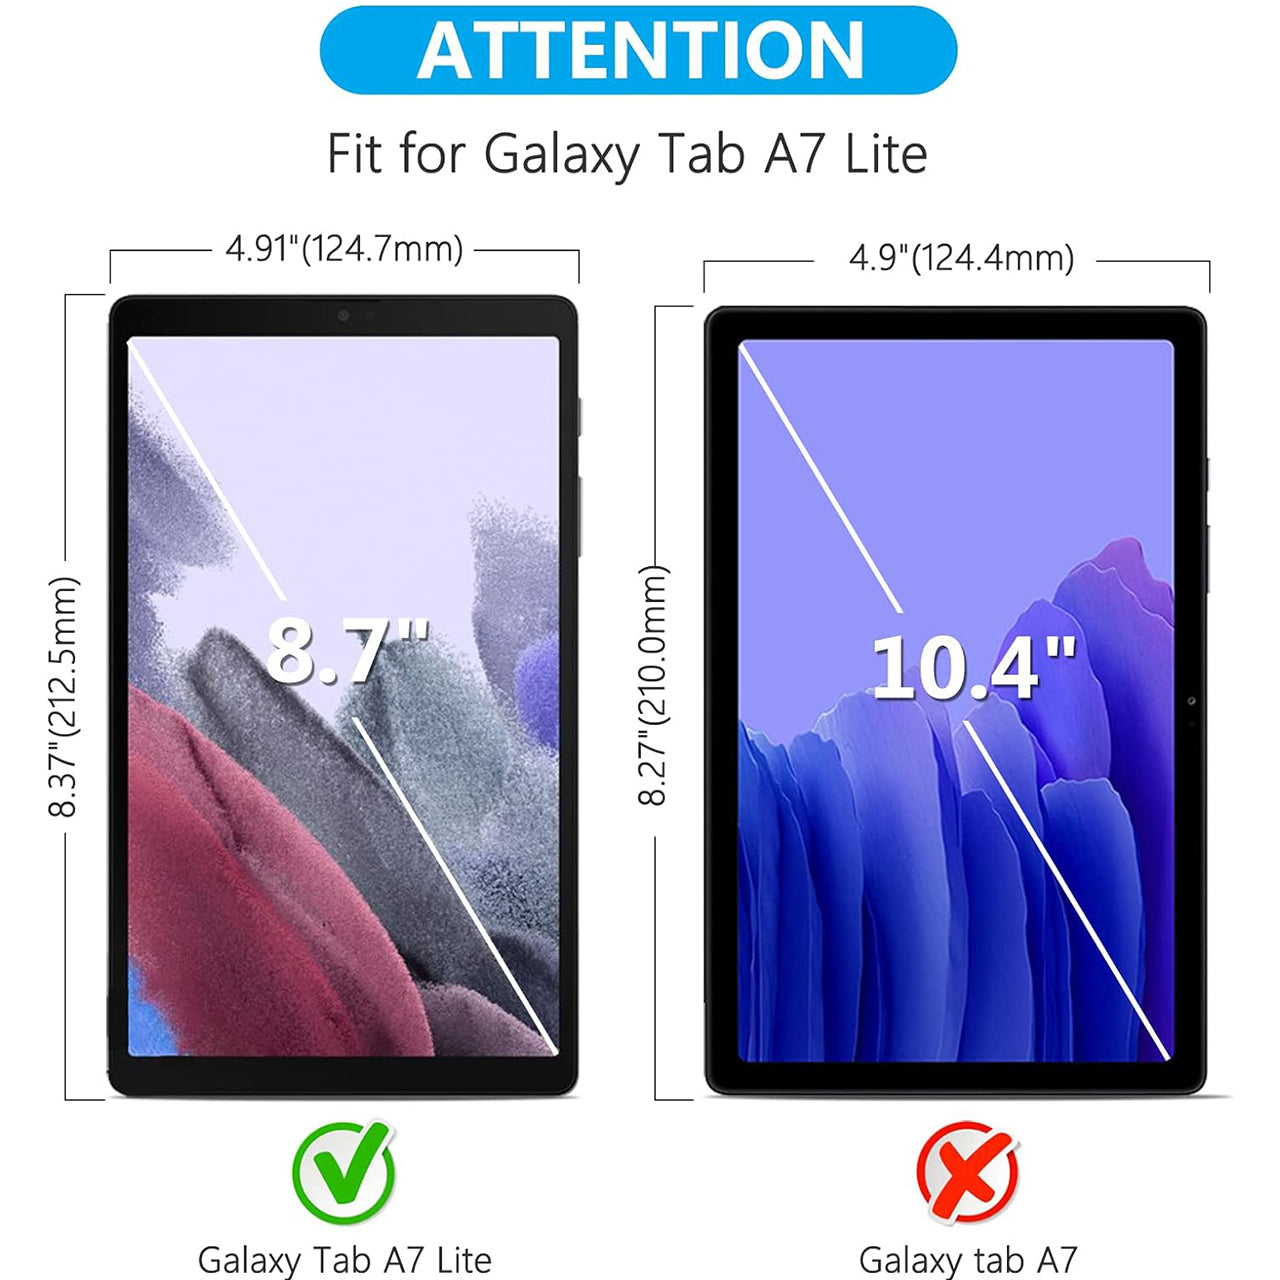 SPARIN  Protector Samsung Galaxy Tab A 8.4 Pulgadas 2020 Tablet - Protector de Pantalla de Vidrio Templado (Sin Burbujas, Dureza 9H) - SPARIN Protector Samsung Galaxy Tab A 8.4 Inch 2020 Tablet - Tempered Glass Screen Protector (Bubble Free, 9H Hardness)